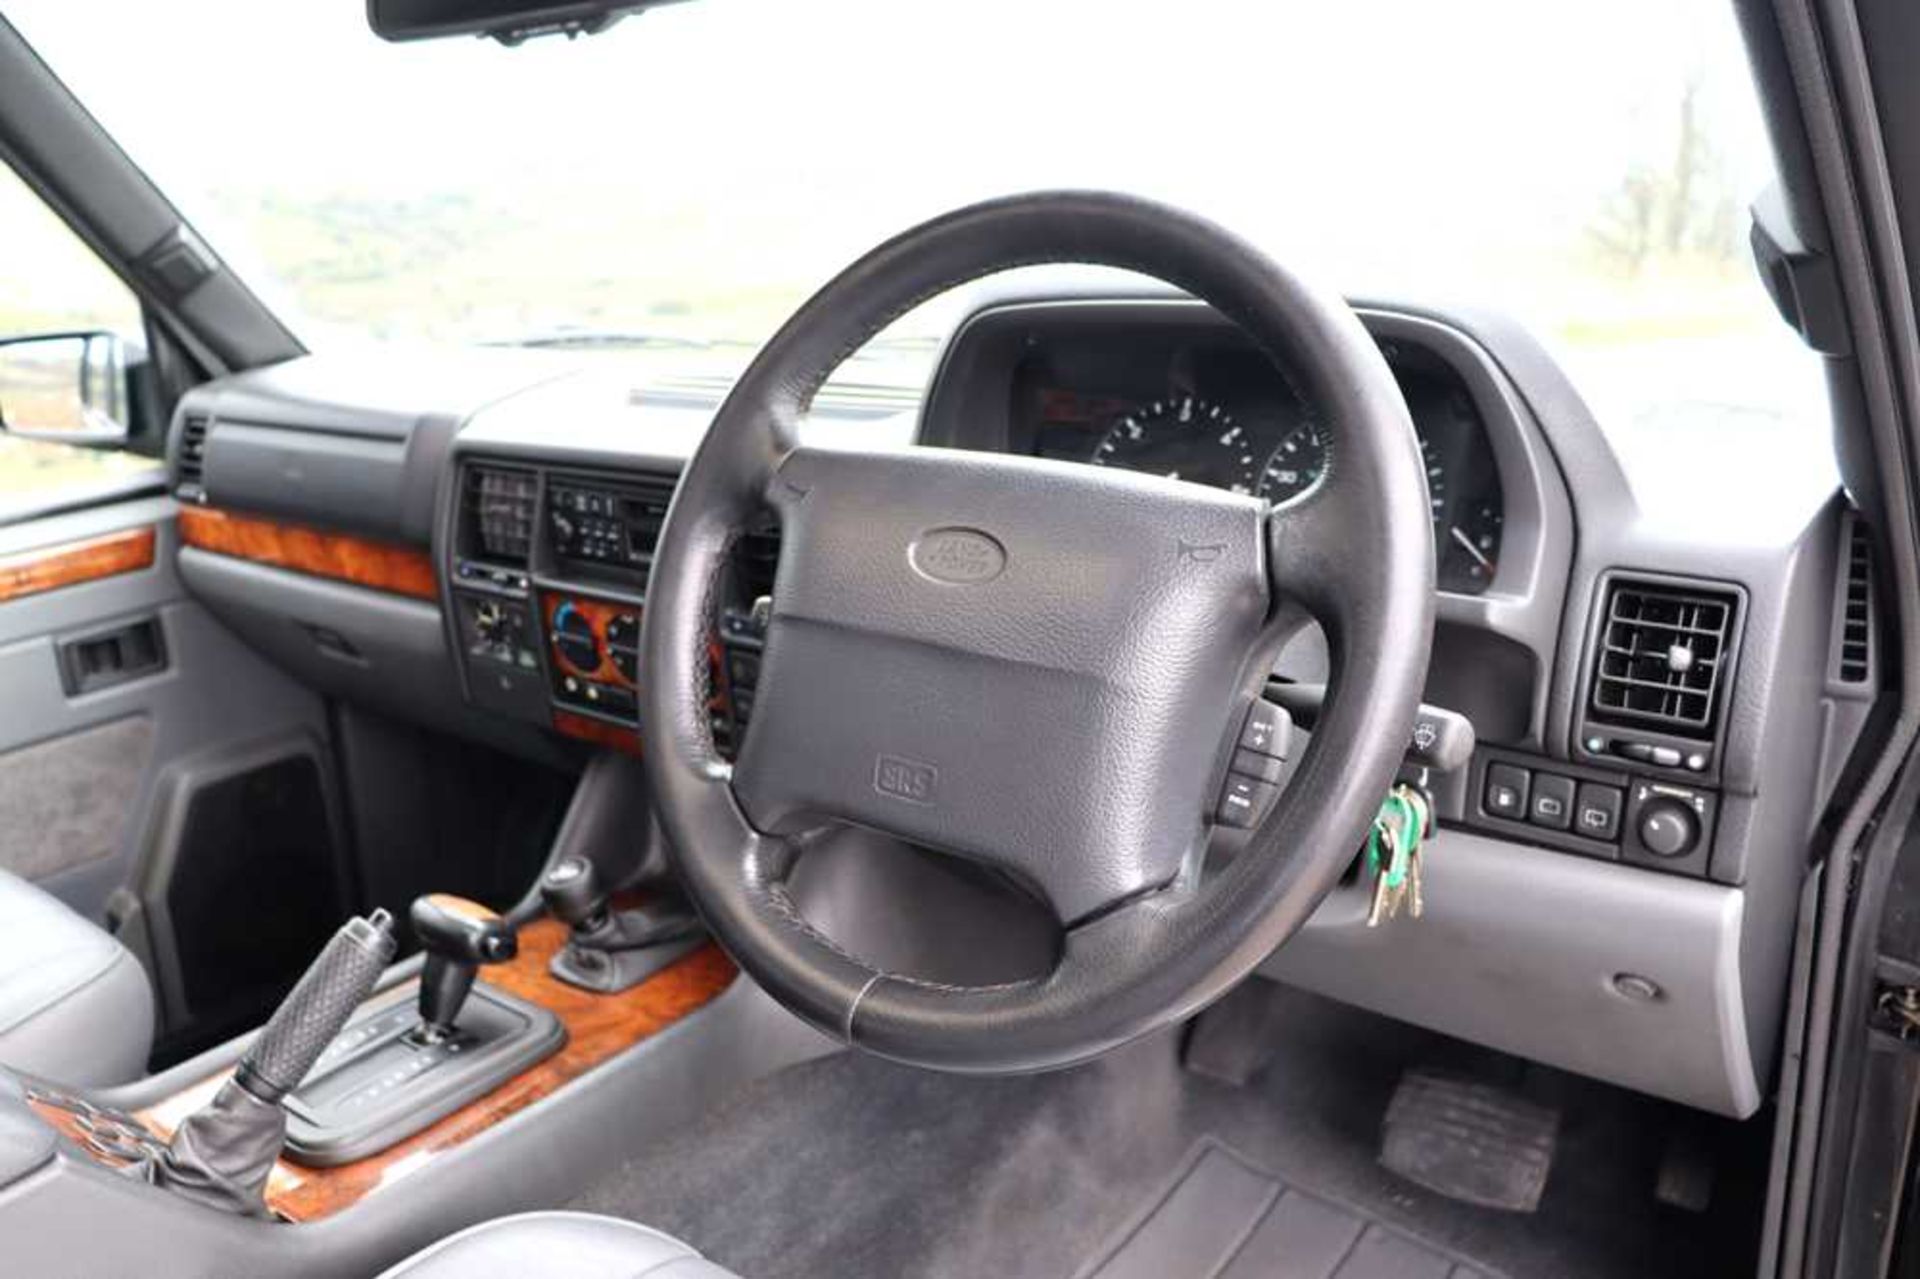 1995 Range Rover Classic Vogue LSE 4.2 Litre Last of the line, 'Soft Dash' model - Image 6 of 80